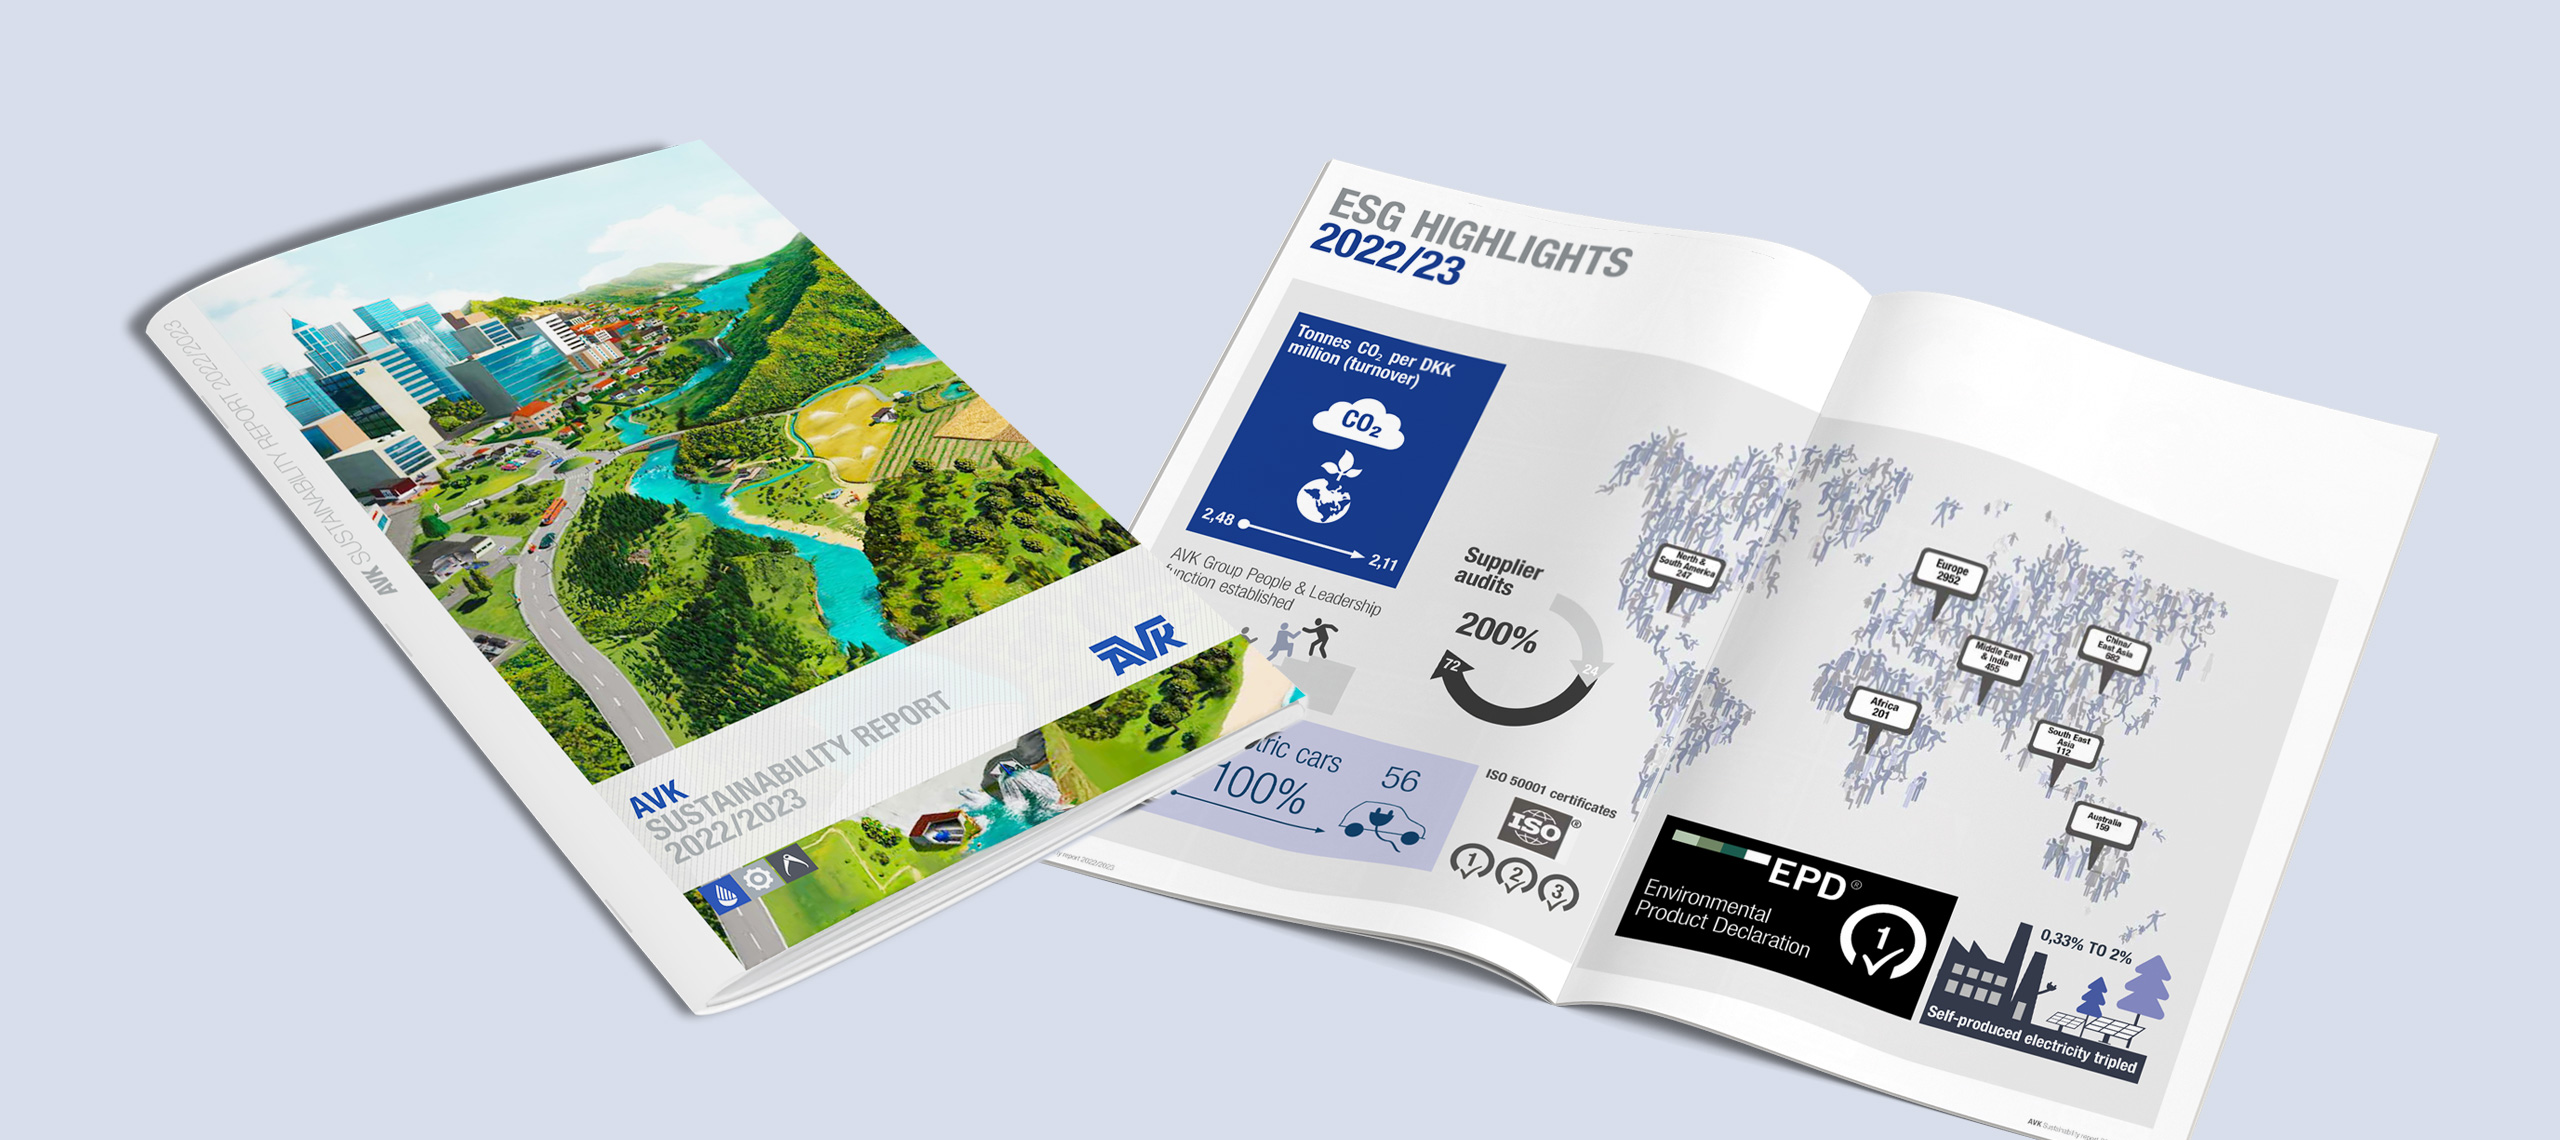 AVK sustainability report ESG highlights